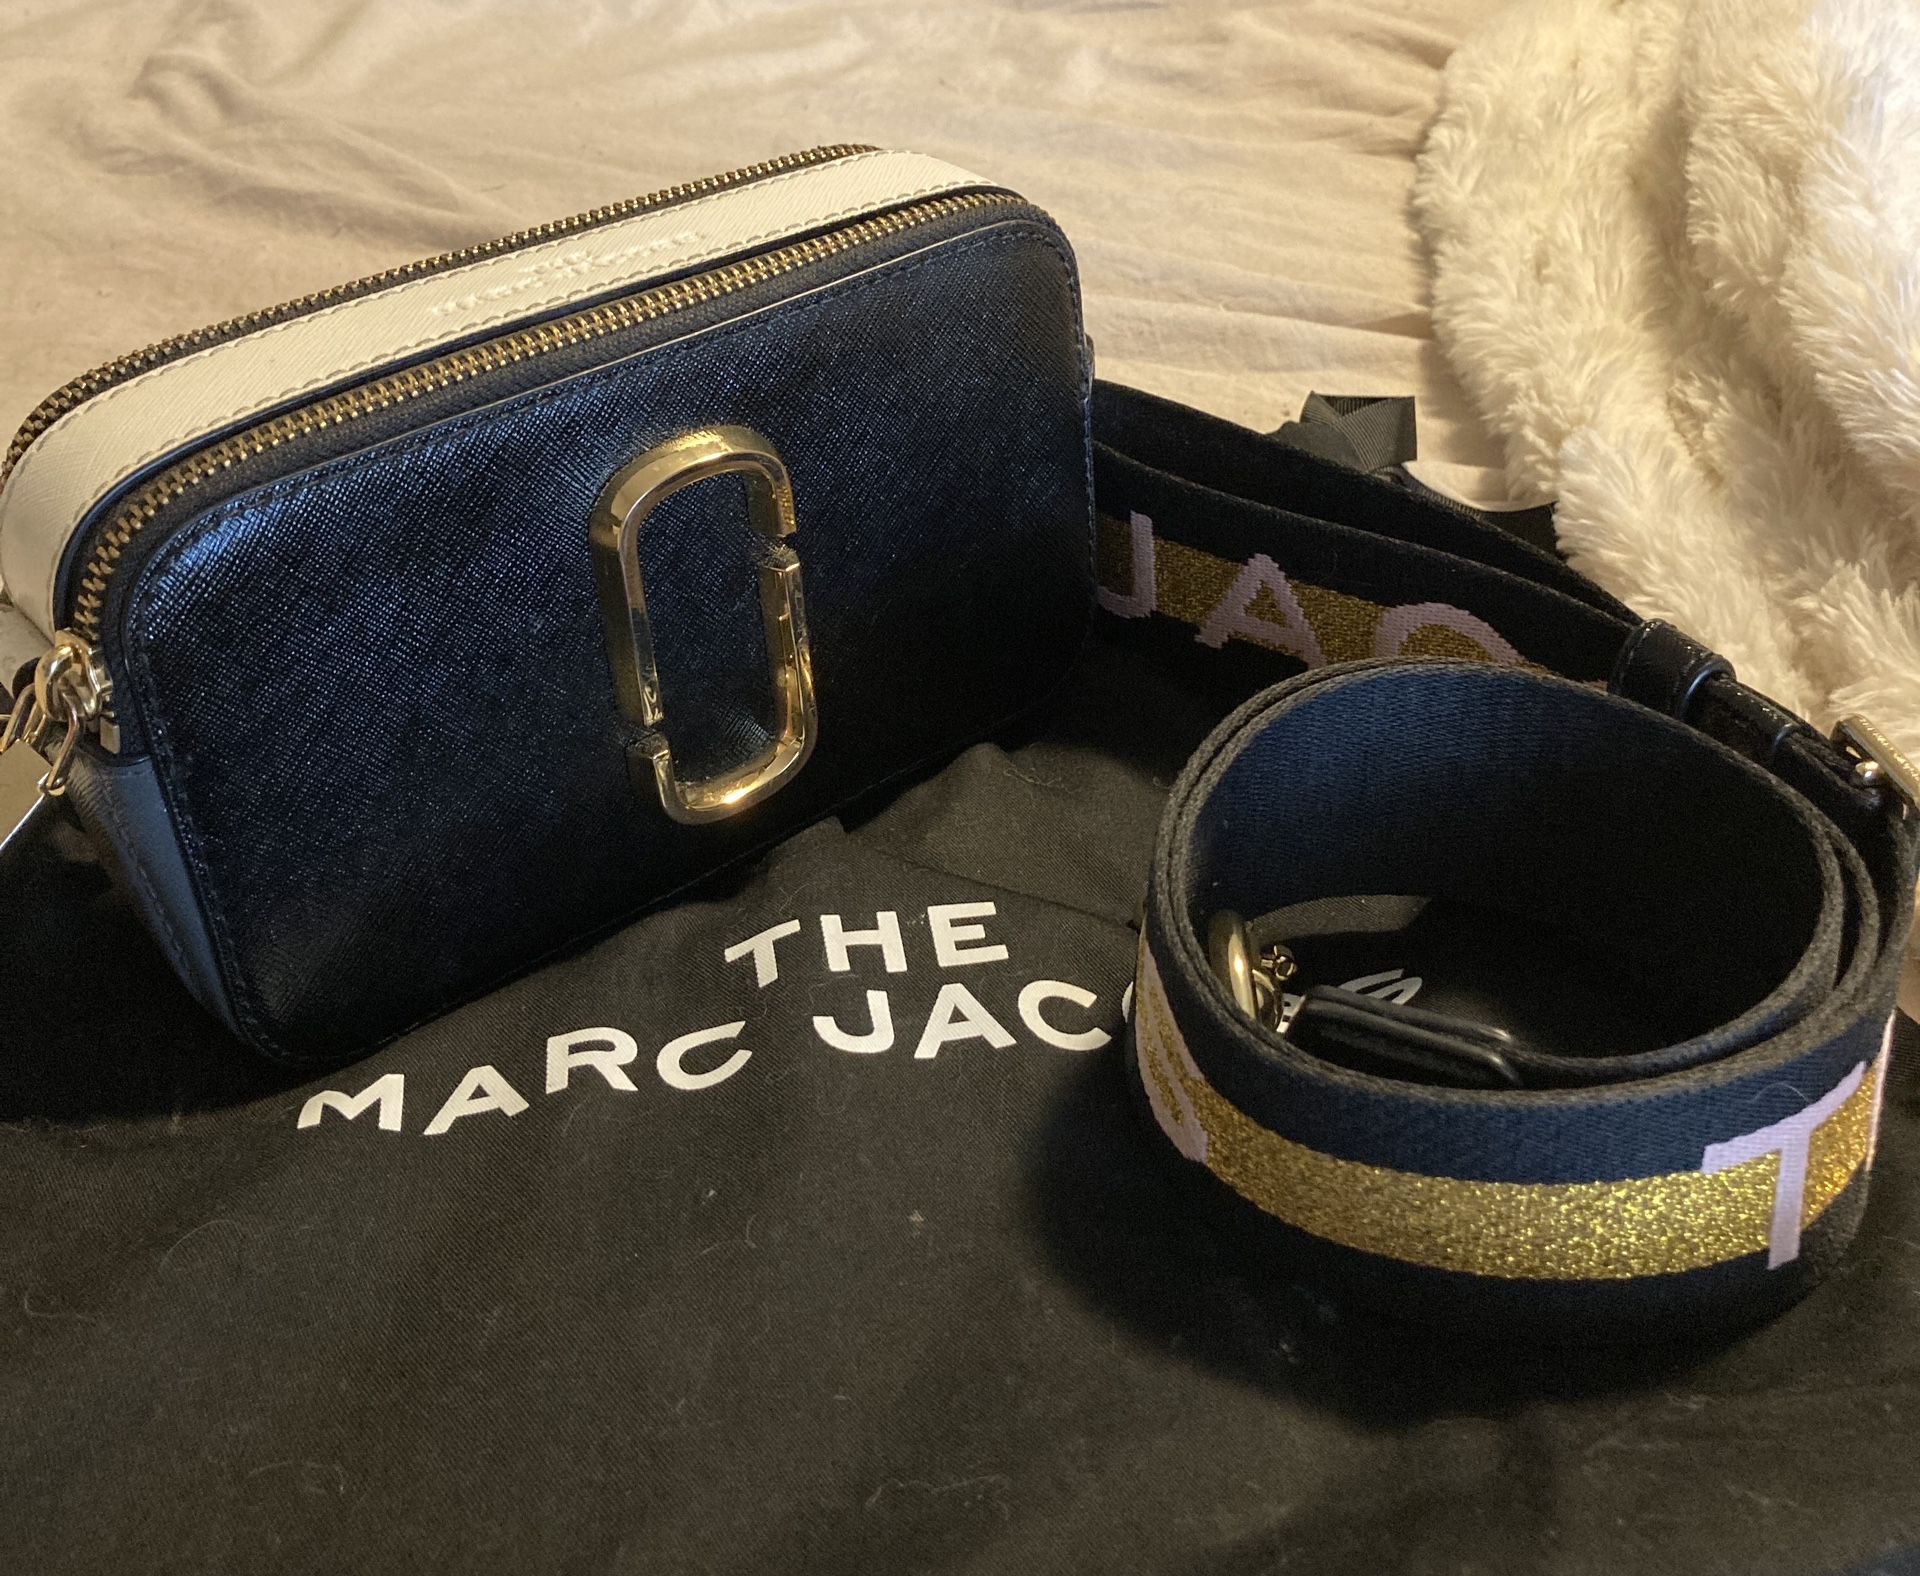 marc jacobs camera bag black